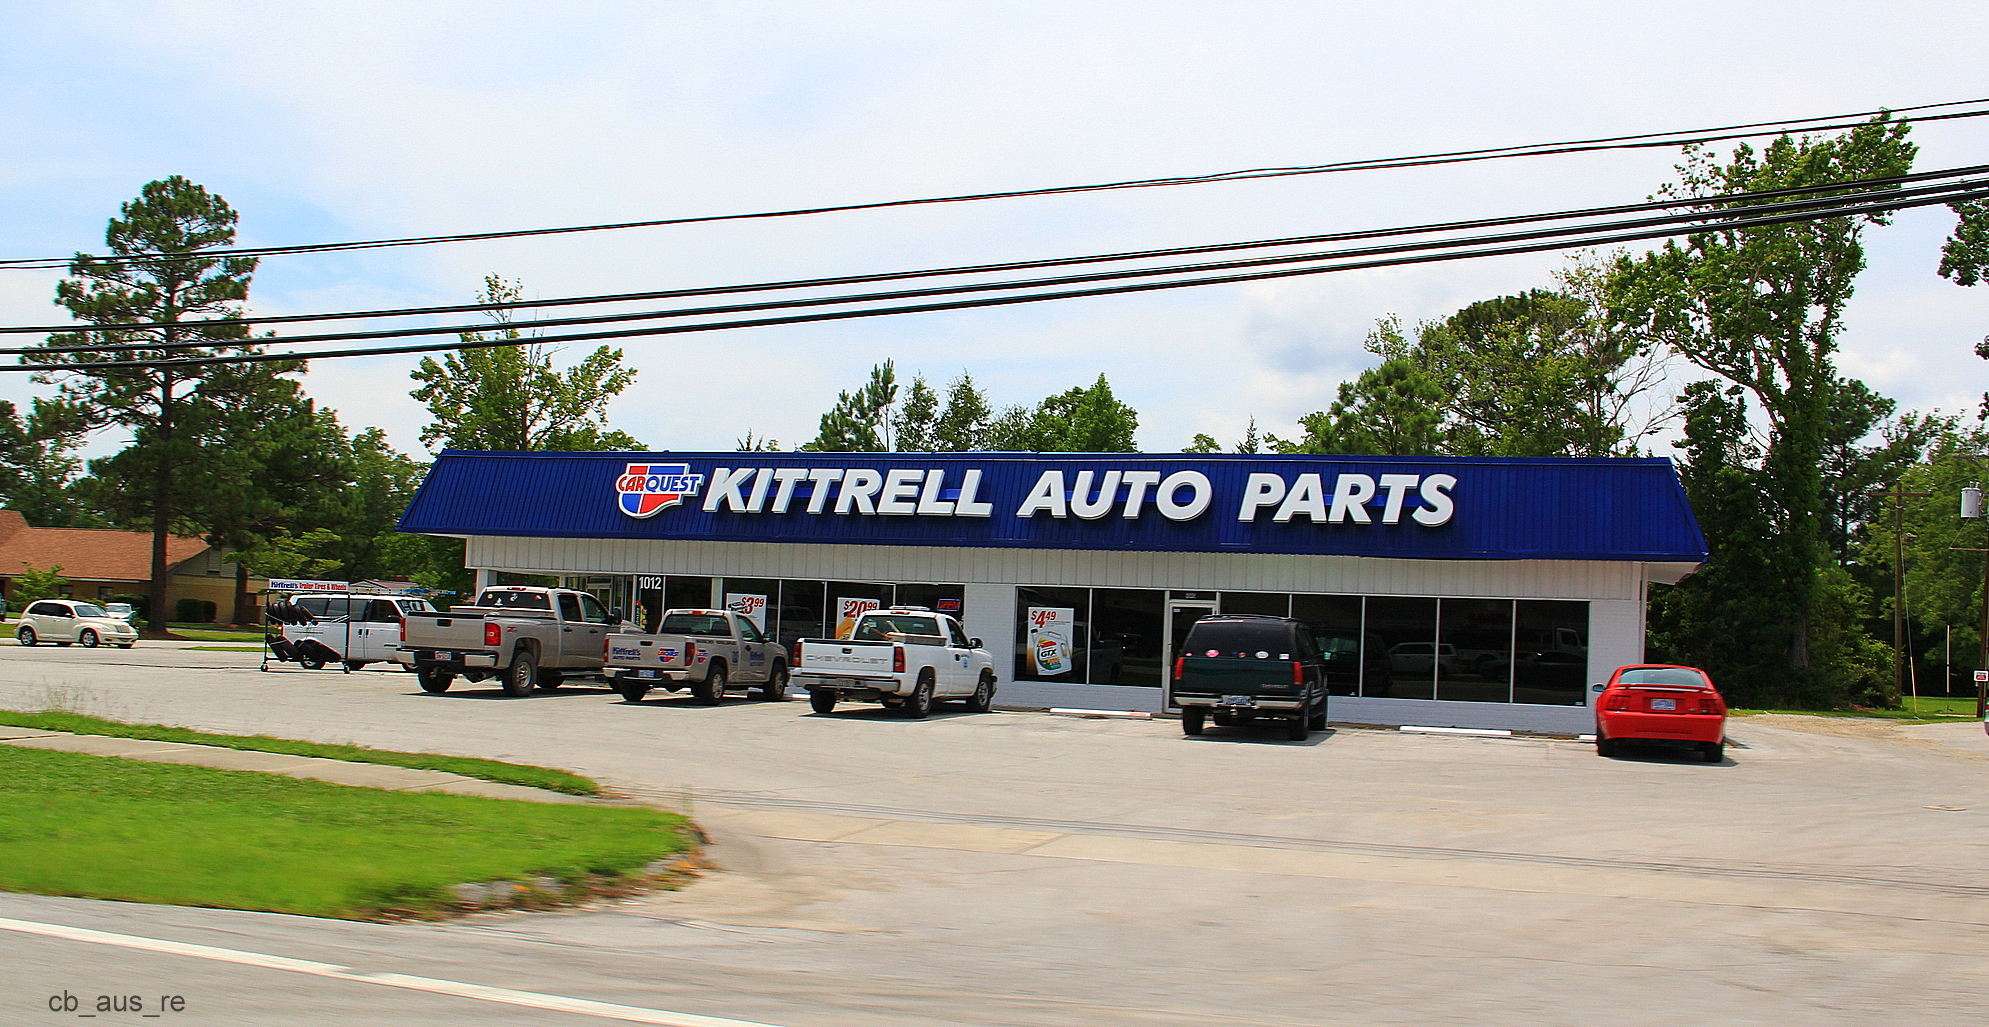 Carquest Auto Parts - Kittrell Auto Parts #2